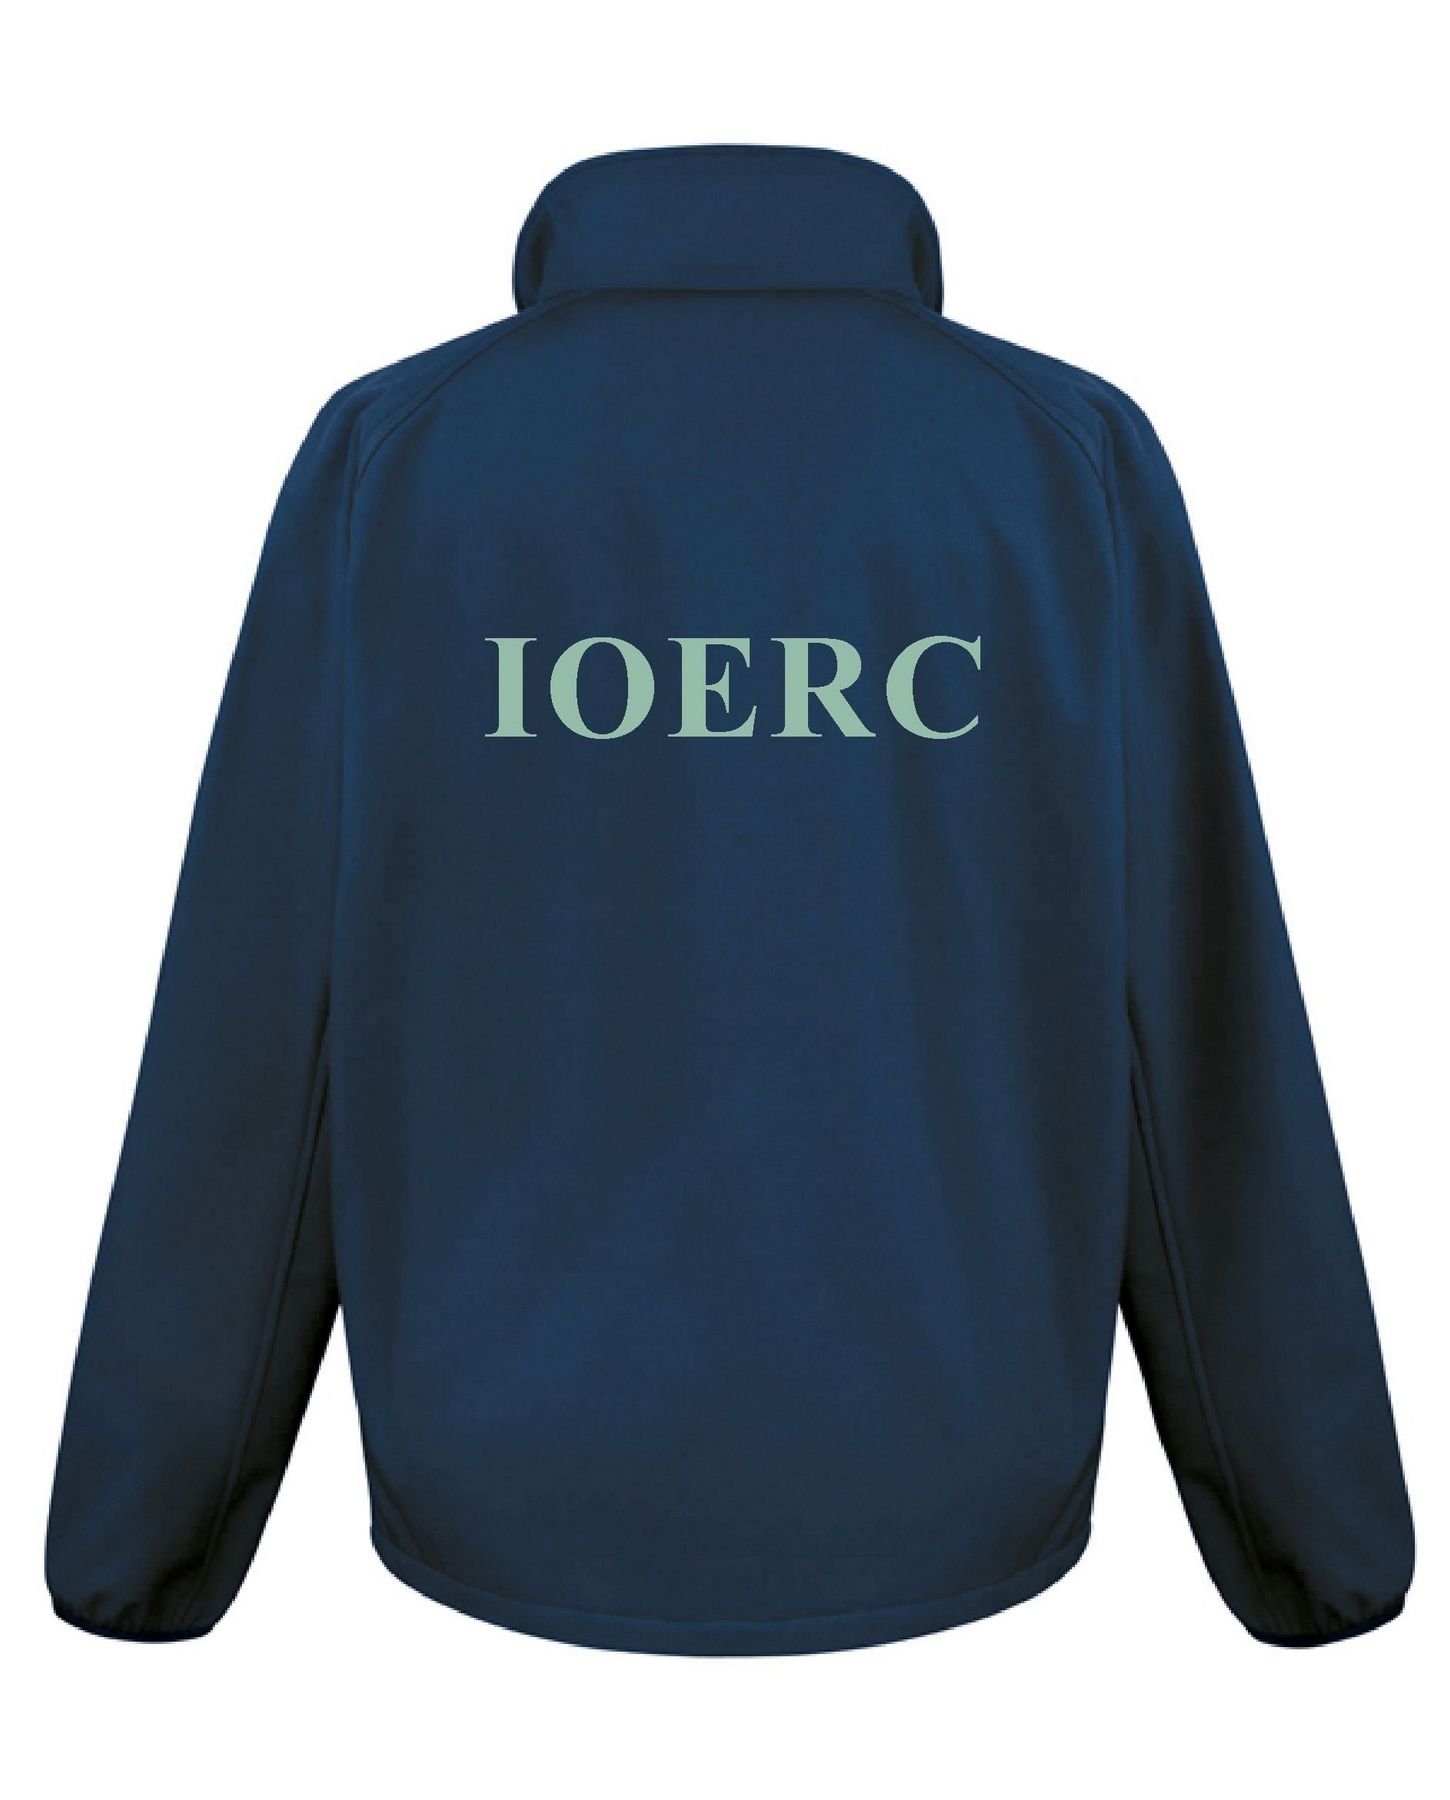 IOERC – Softshell Jacket (Unisex)